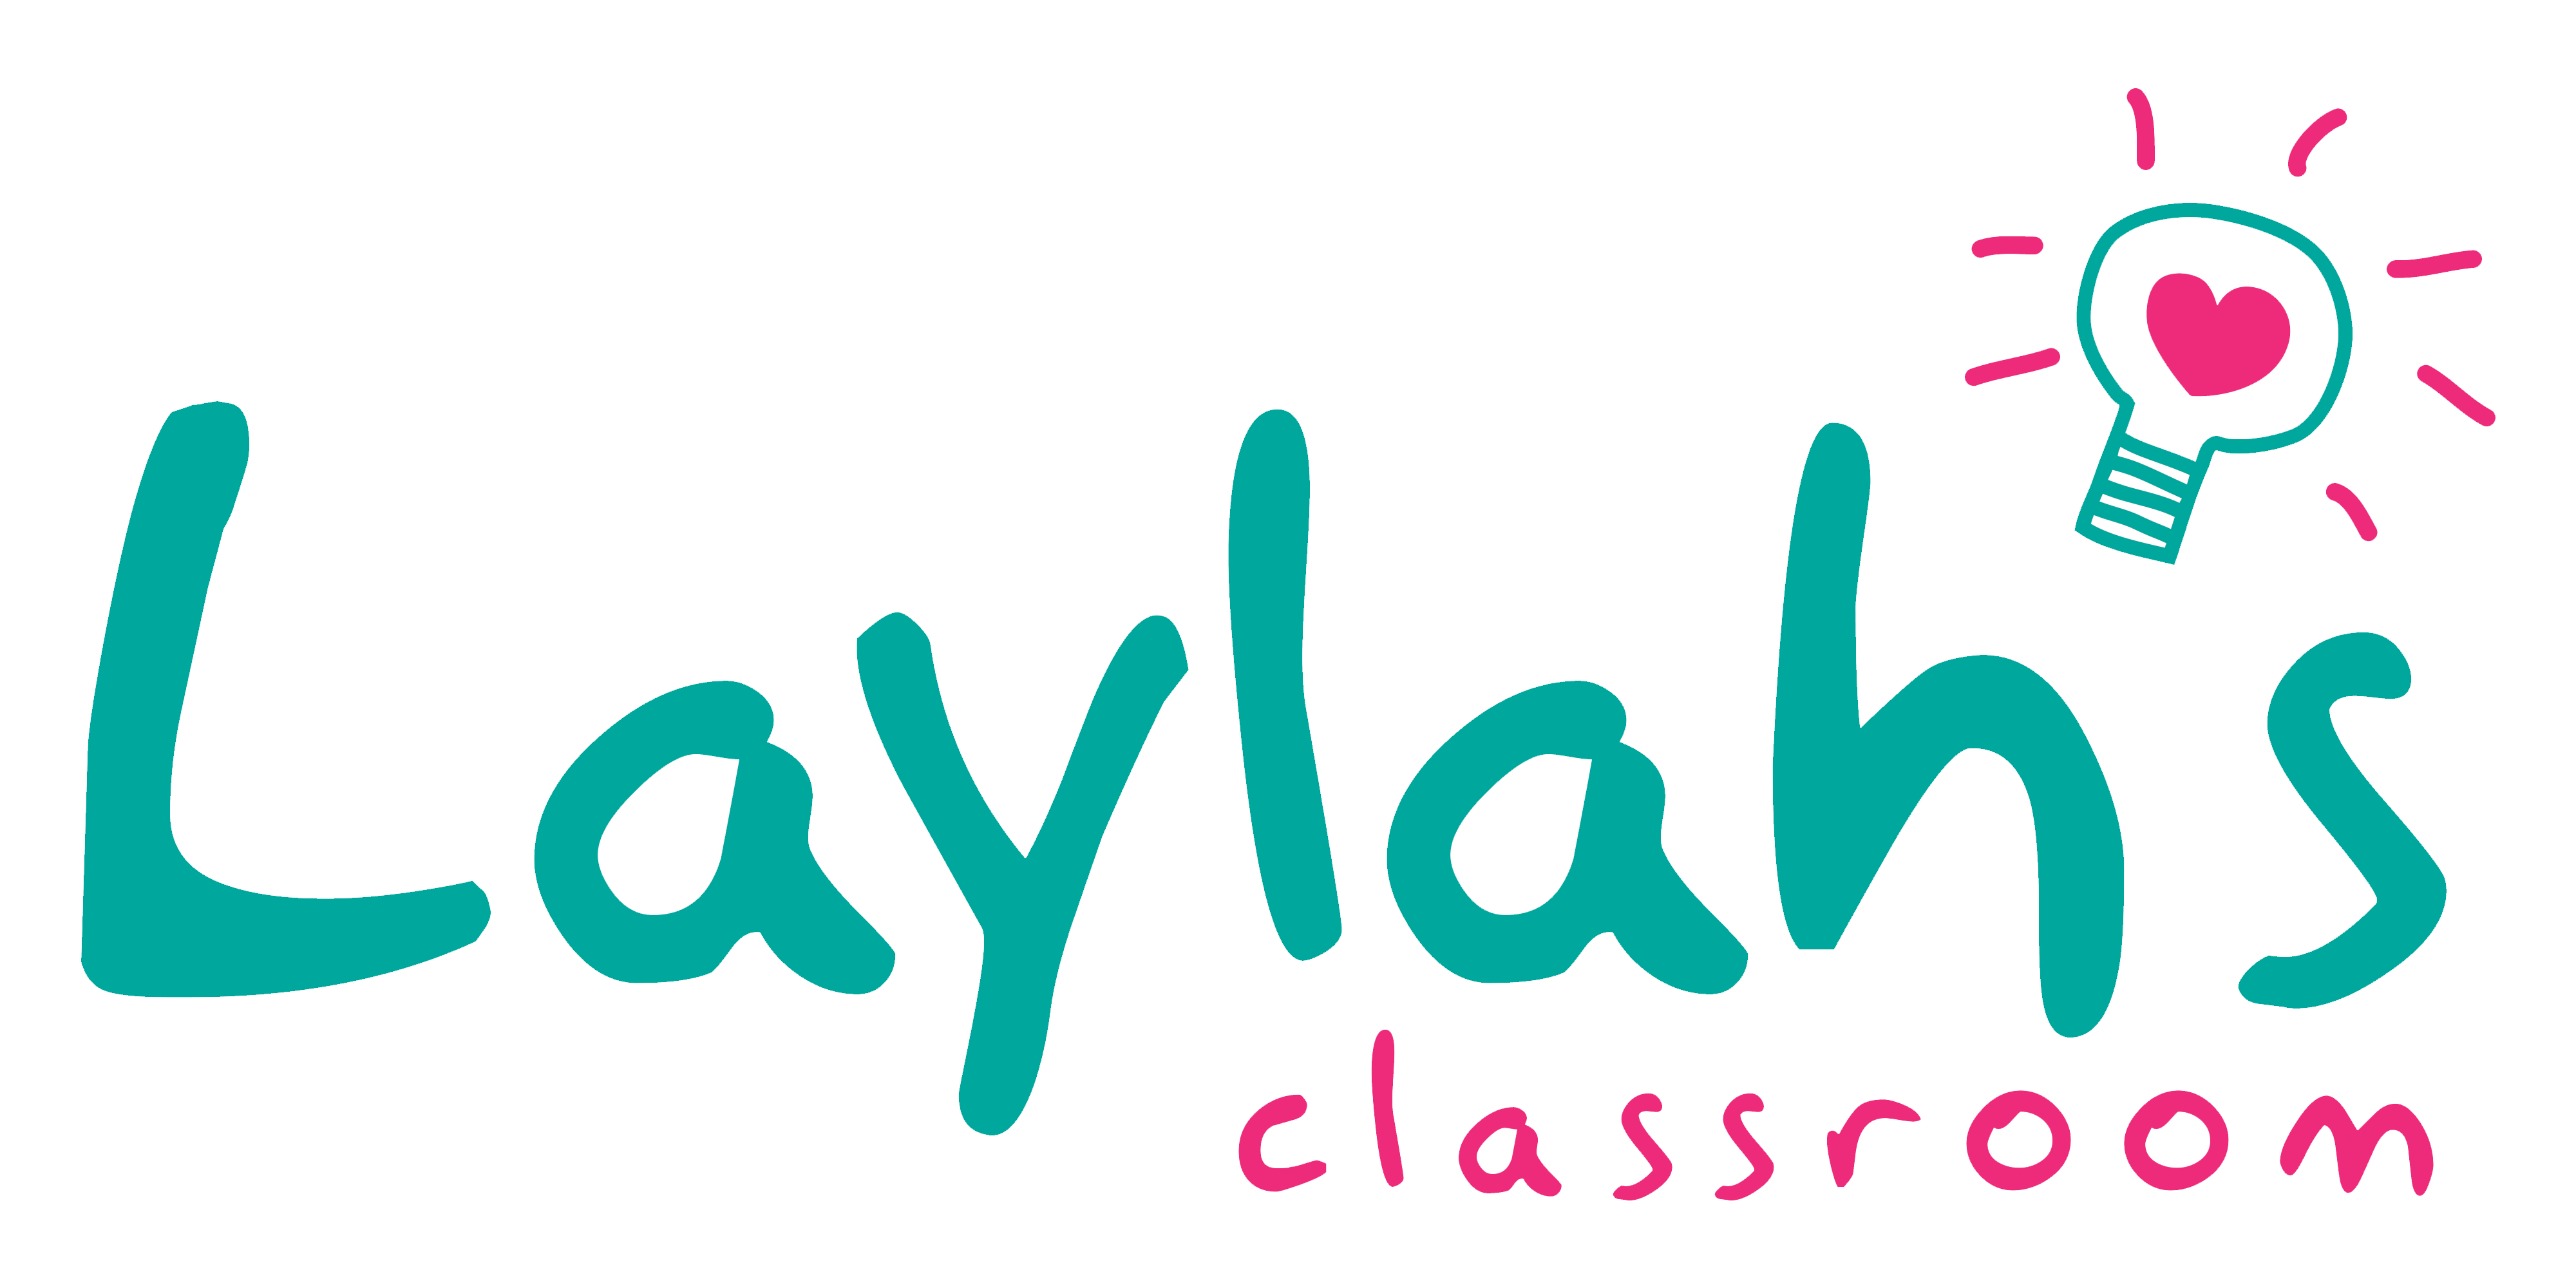 Laylah's Classroom